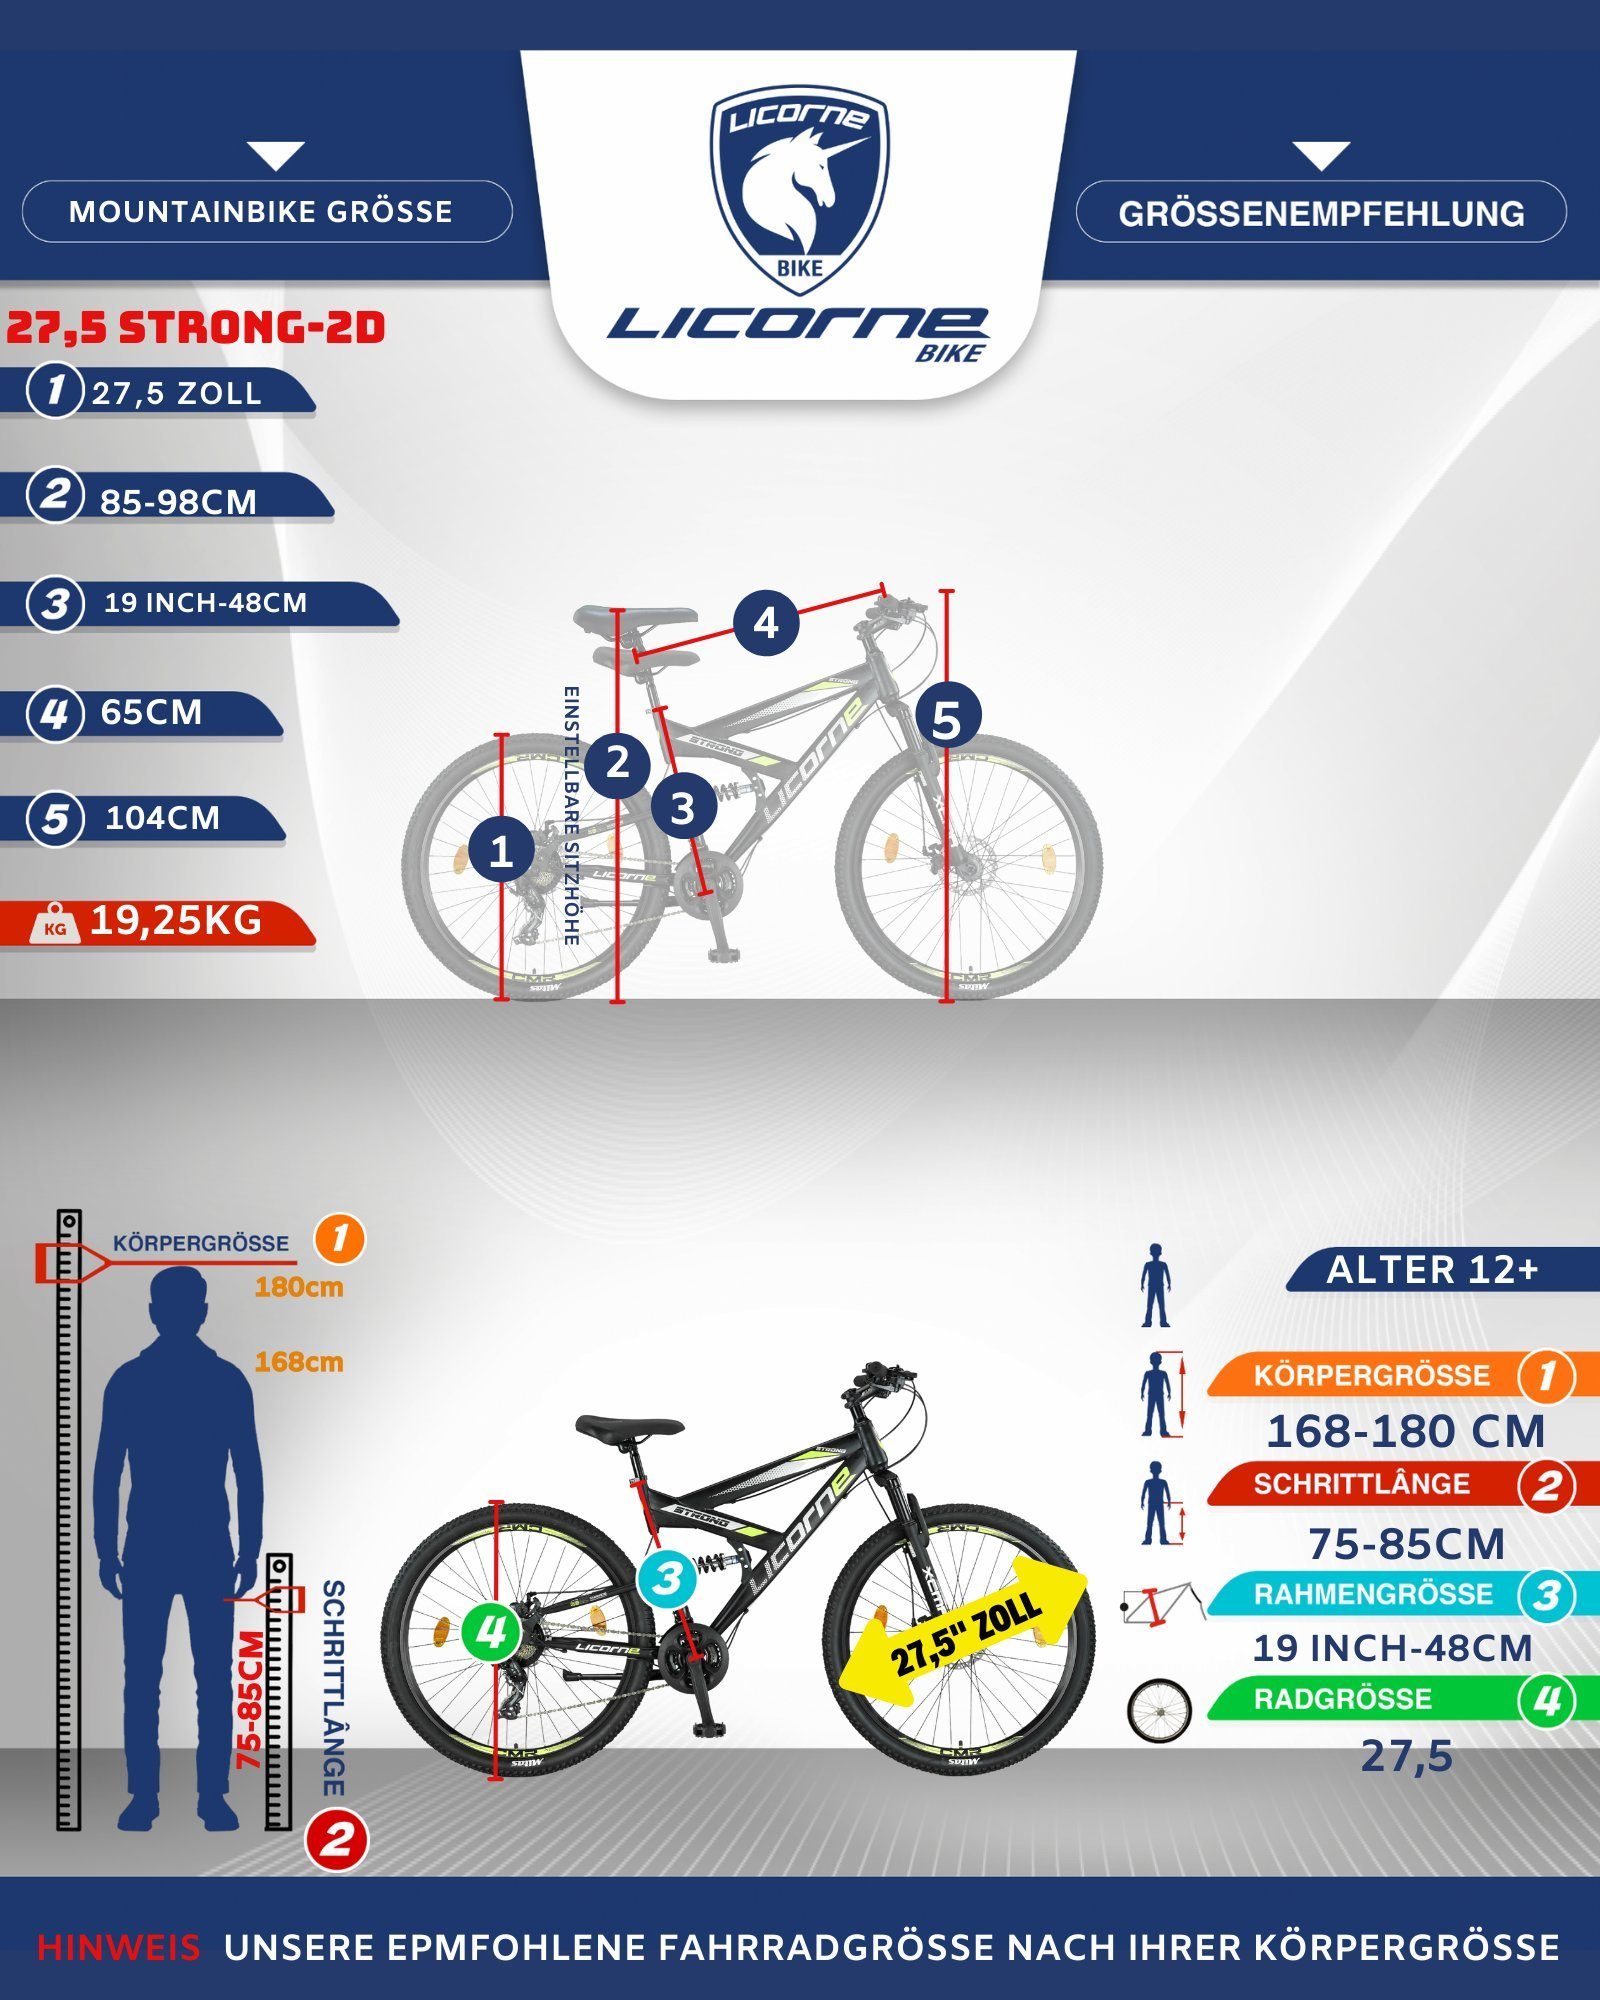 Mountainbike in Licorne Licorne Bike Premium Mountainbike Strong Schwarz/Lime Bike 29 Zoll und 27,5 26, 2D